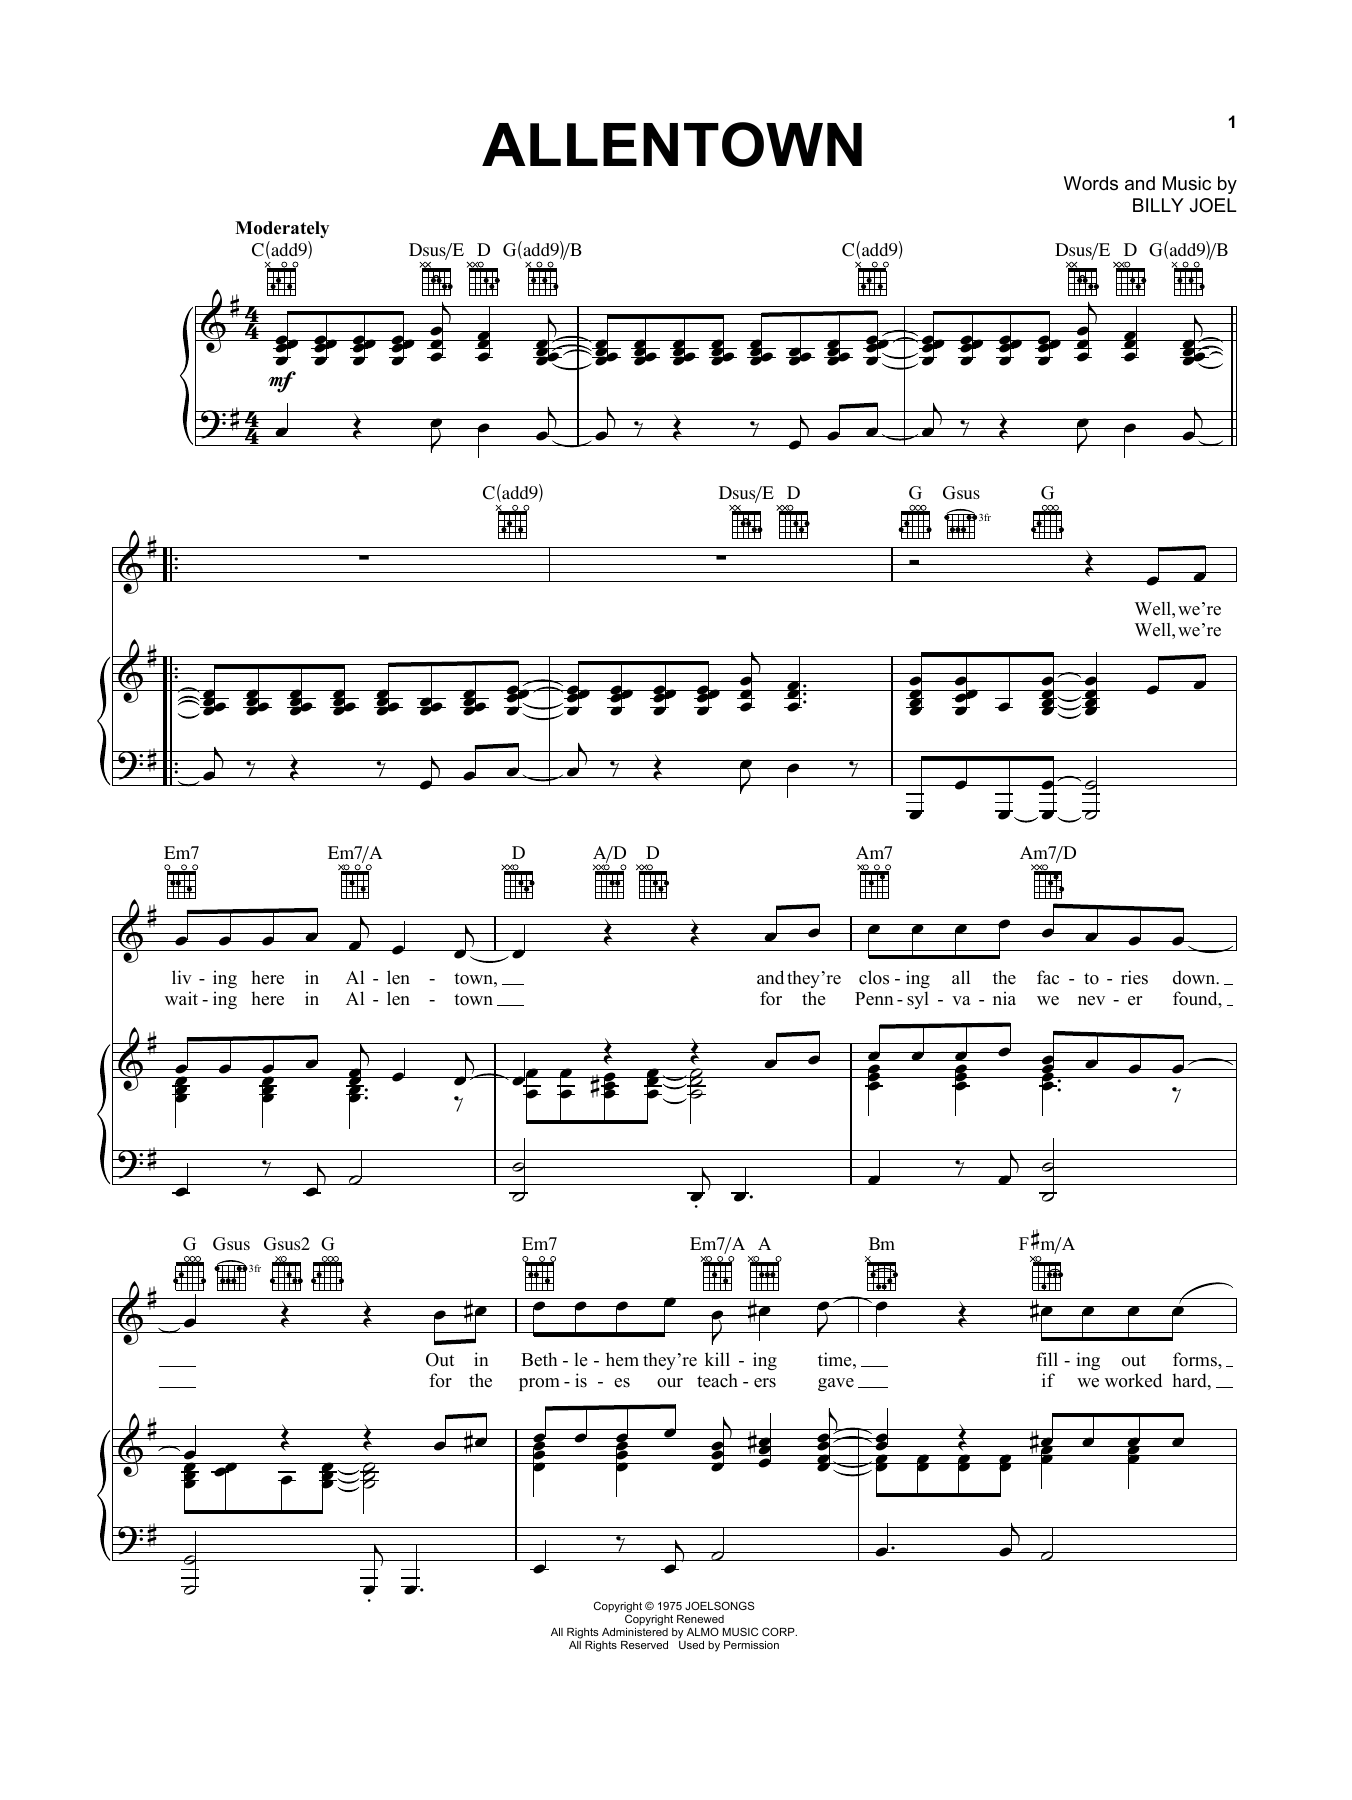 Billy Joel Allentown Sheet Music Notes & Chords for Lyrics & Chords - Download or Print PDF